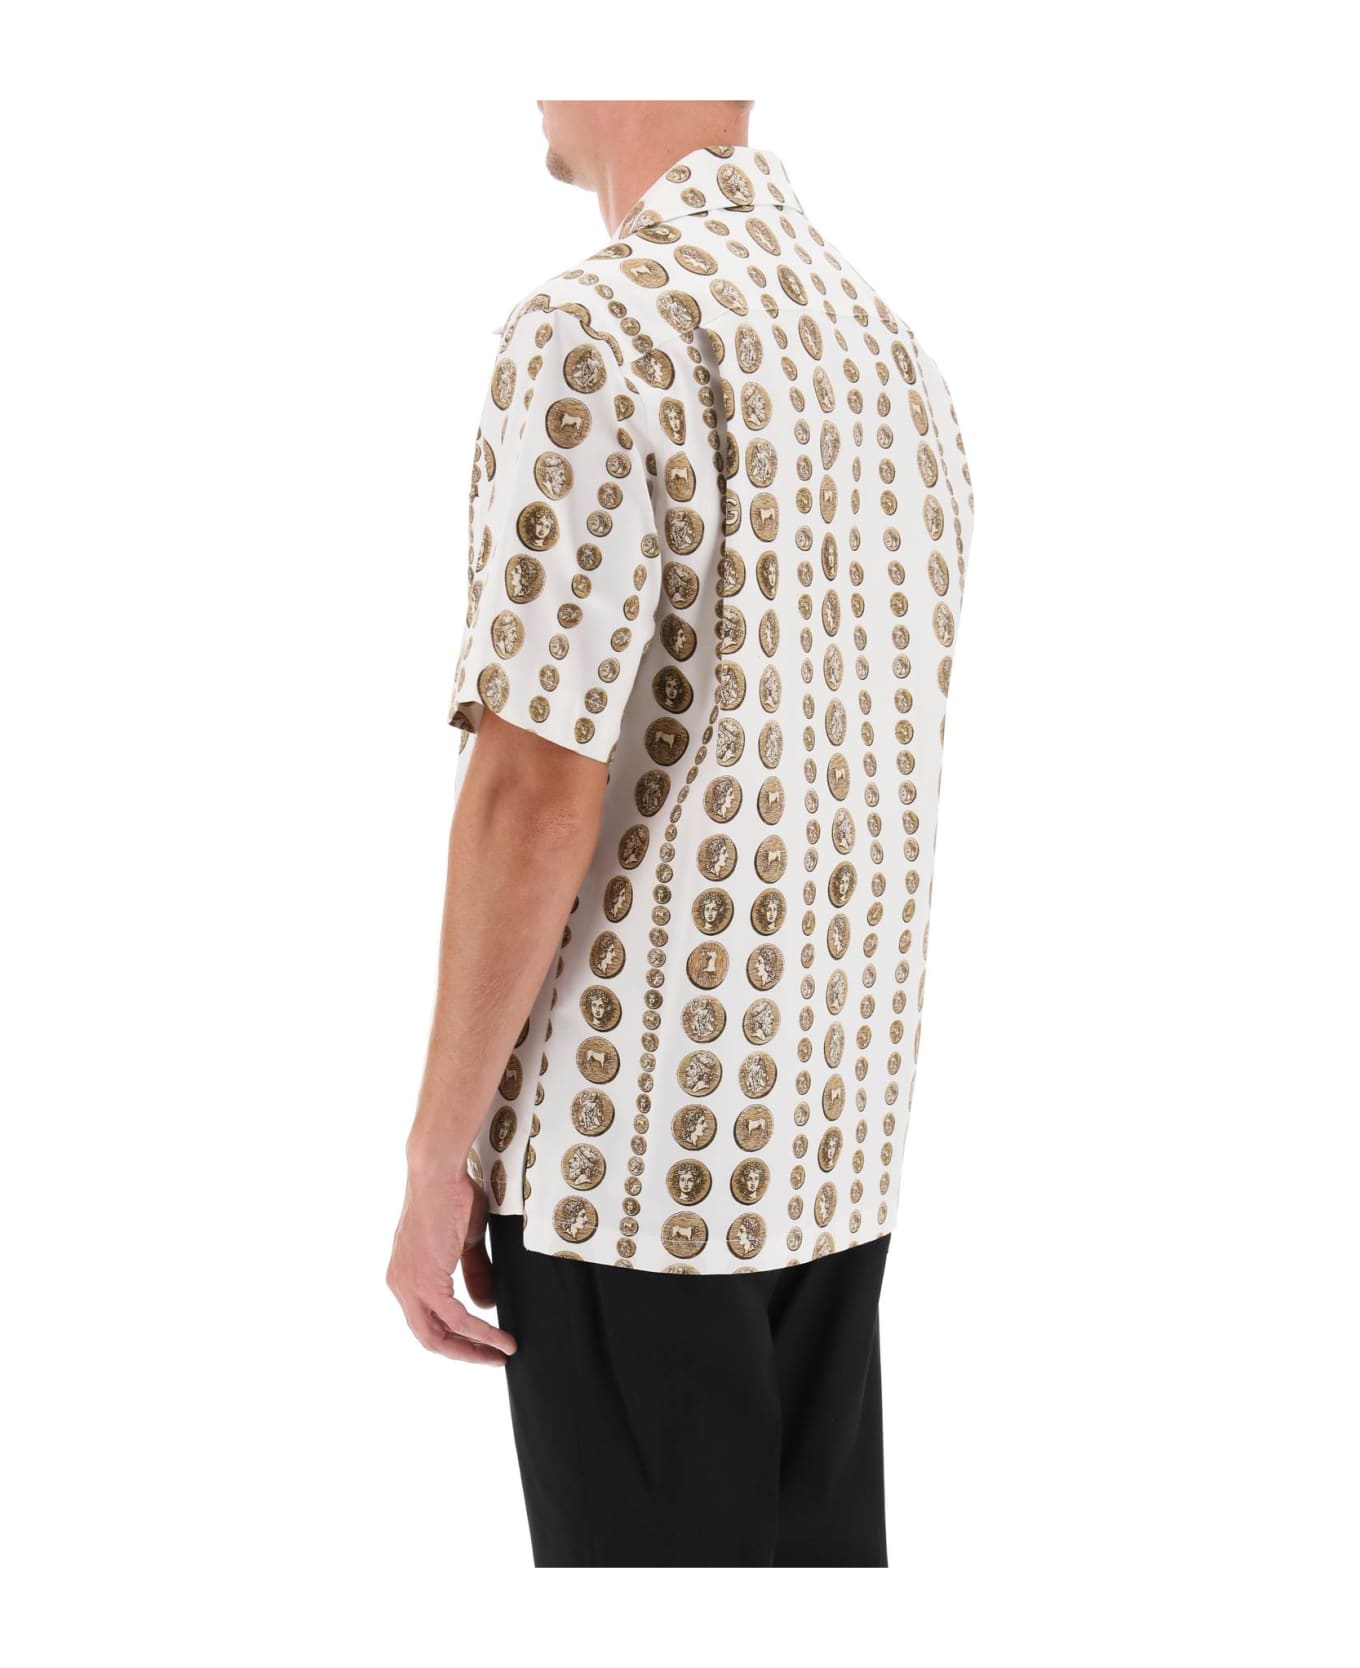 Dolce & Gabbana Coin Print Short Sleeve Shirt - MONETE FDO BCO NAT (White)